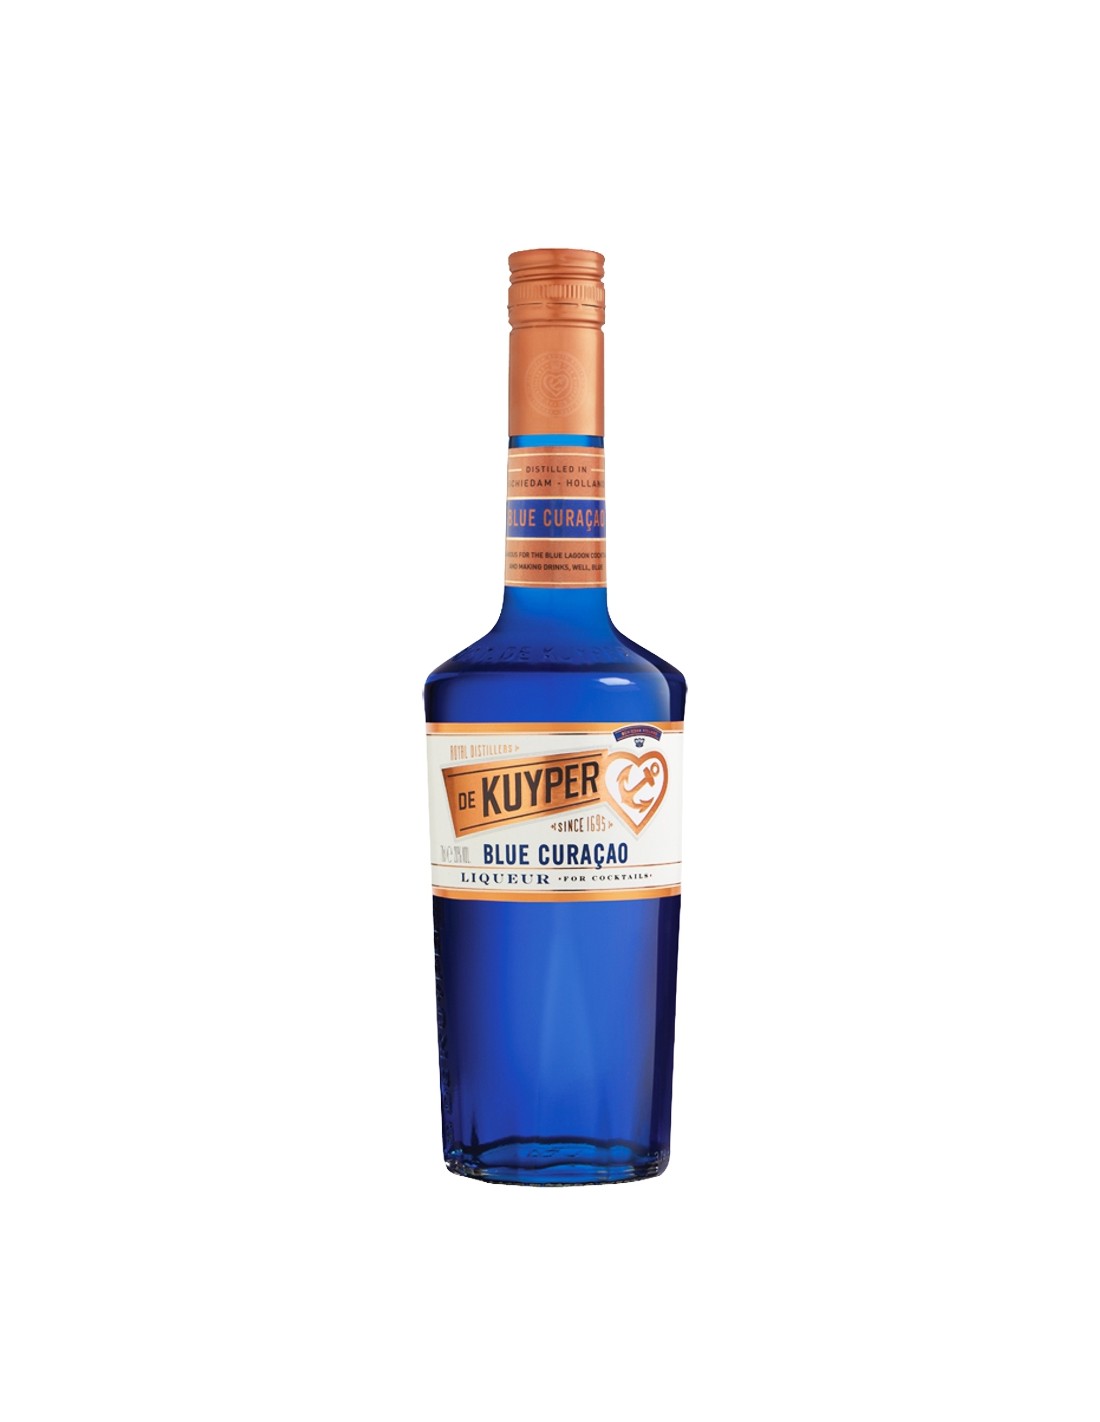 Lichior De Kuyper Blue Curacao 20% alc., 0.7L, Olanda alcooldiscount.ro